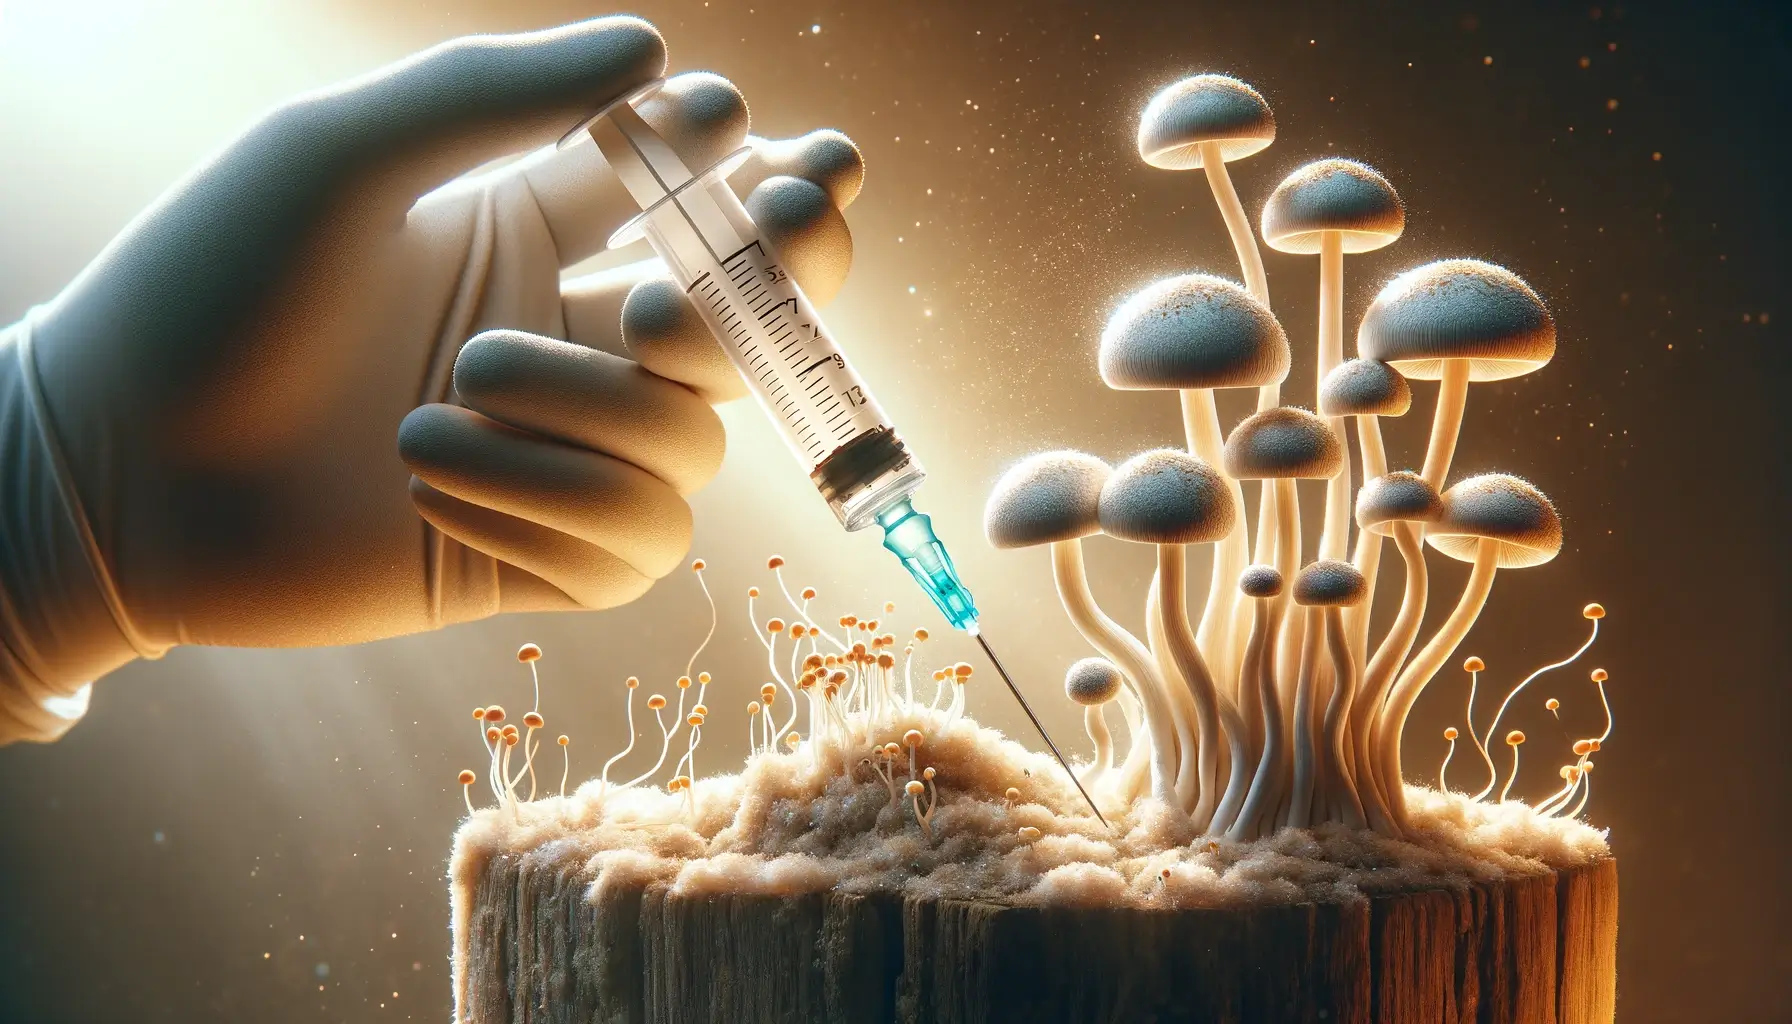 Elegant depiction of mushroom spores growing from a syringe into mushrooms